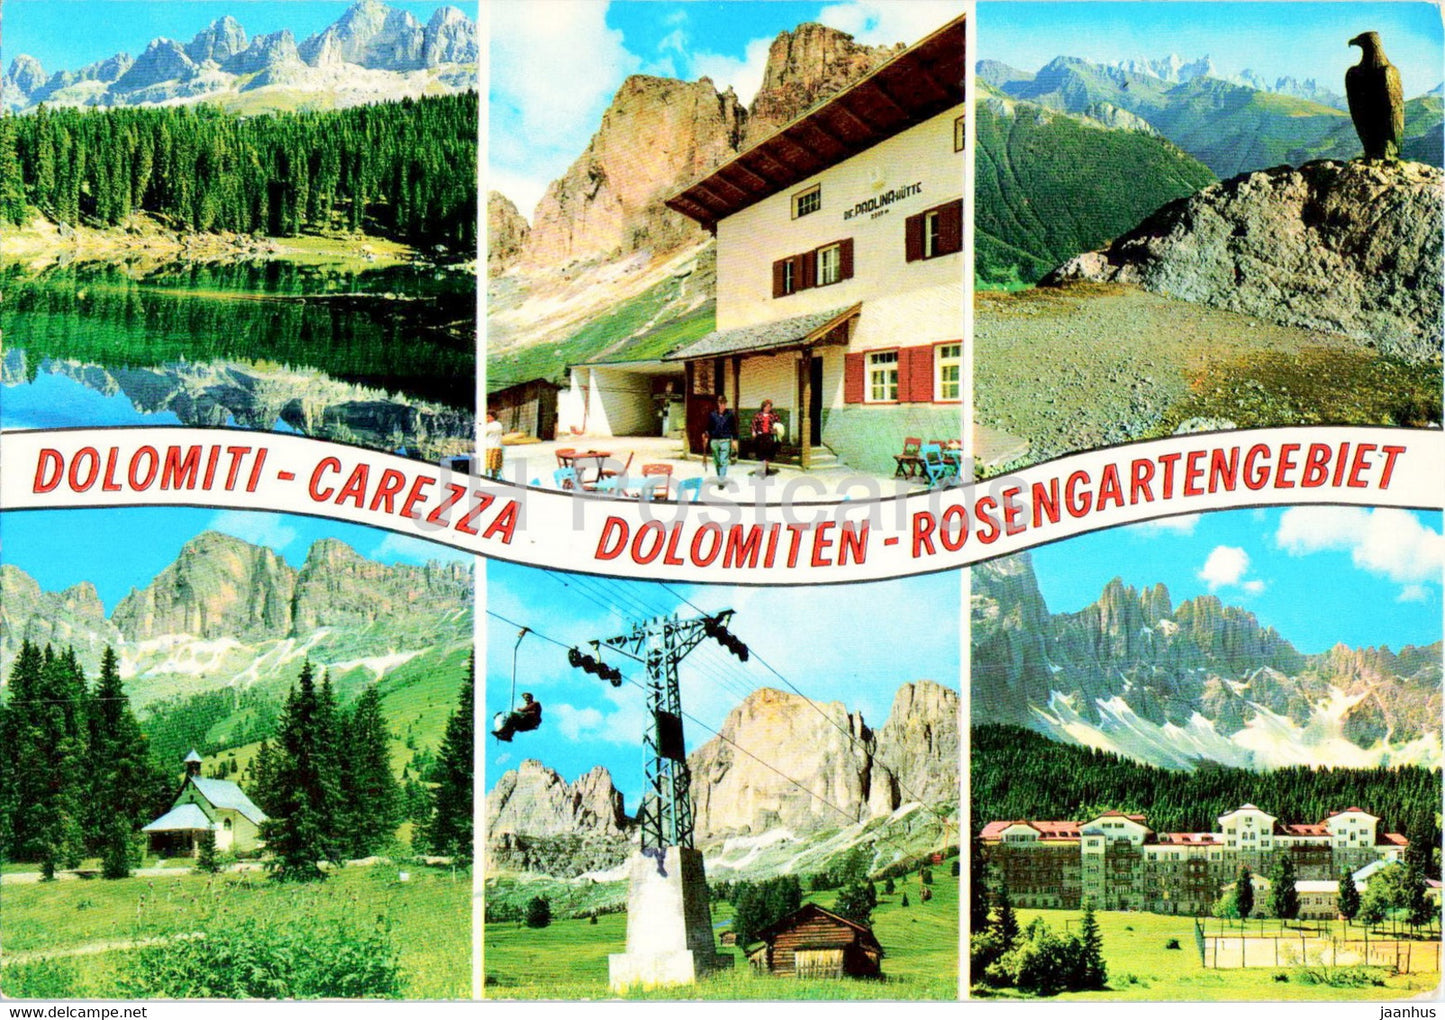 Dolomiti - Carezza - Dolomiten Rosengartengebiet - multiview - Italy - unused - JH Postcards